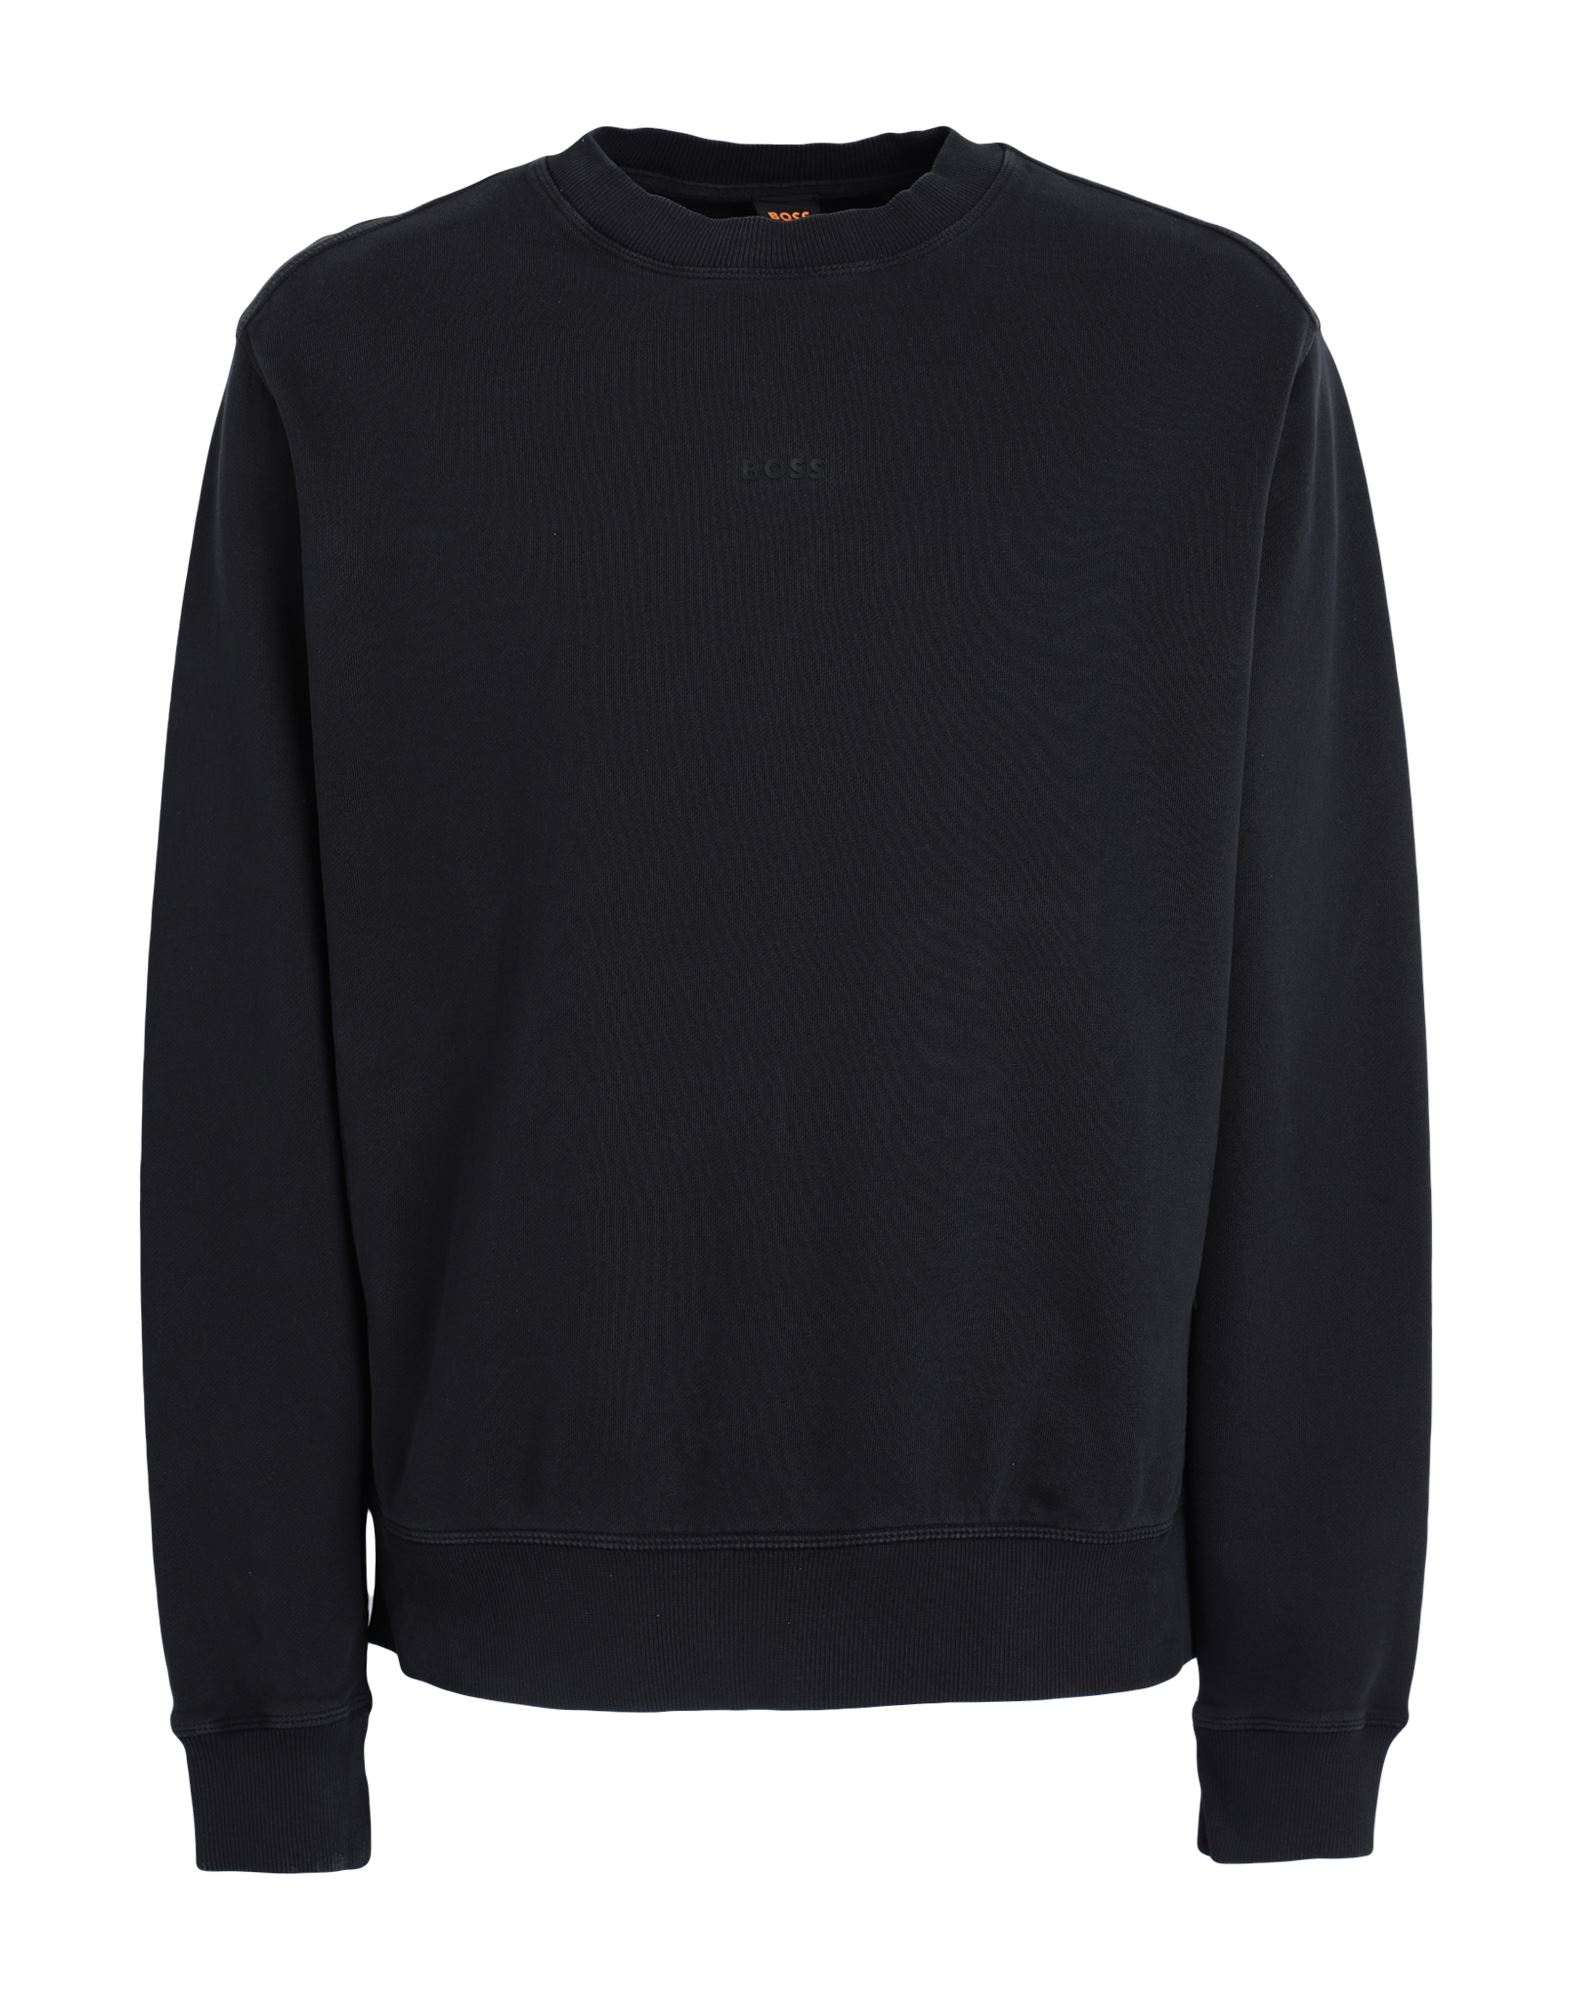 Hugo Boss Sweatshirts In Black